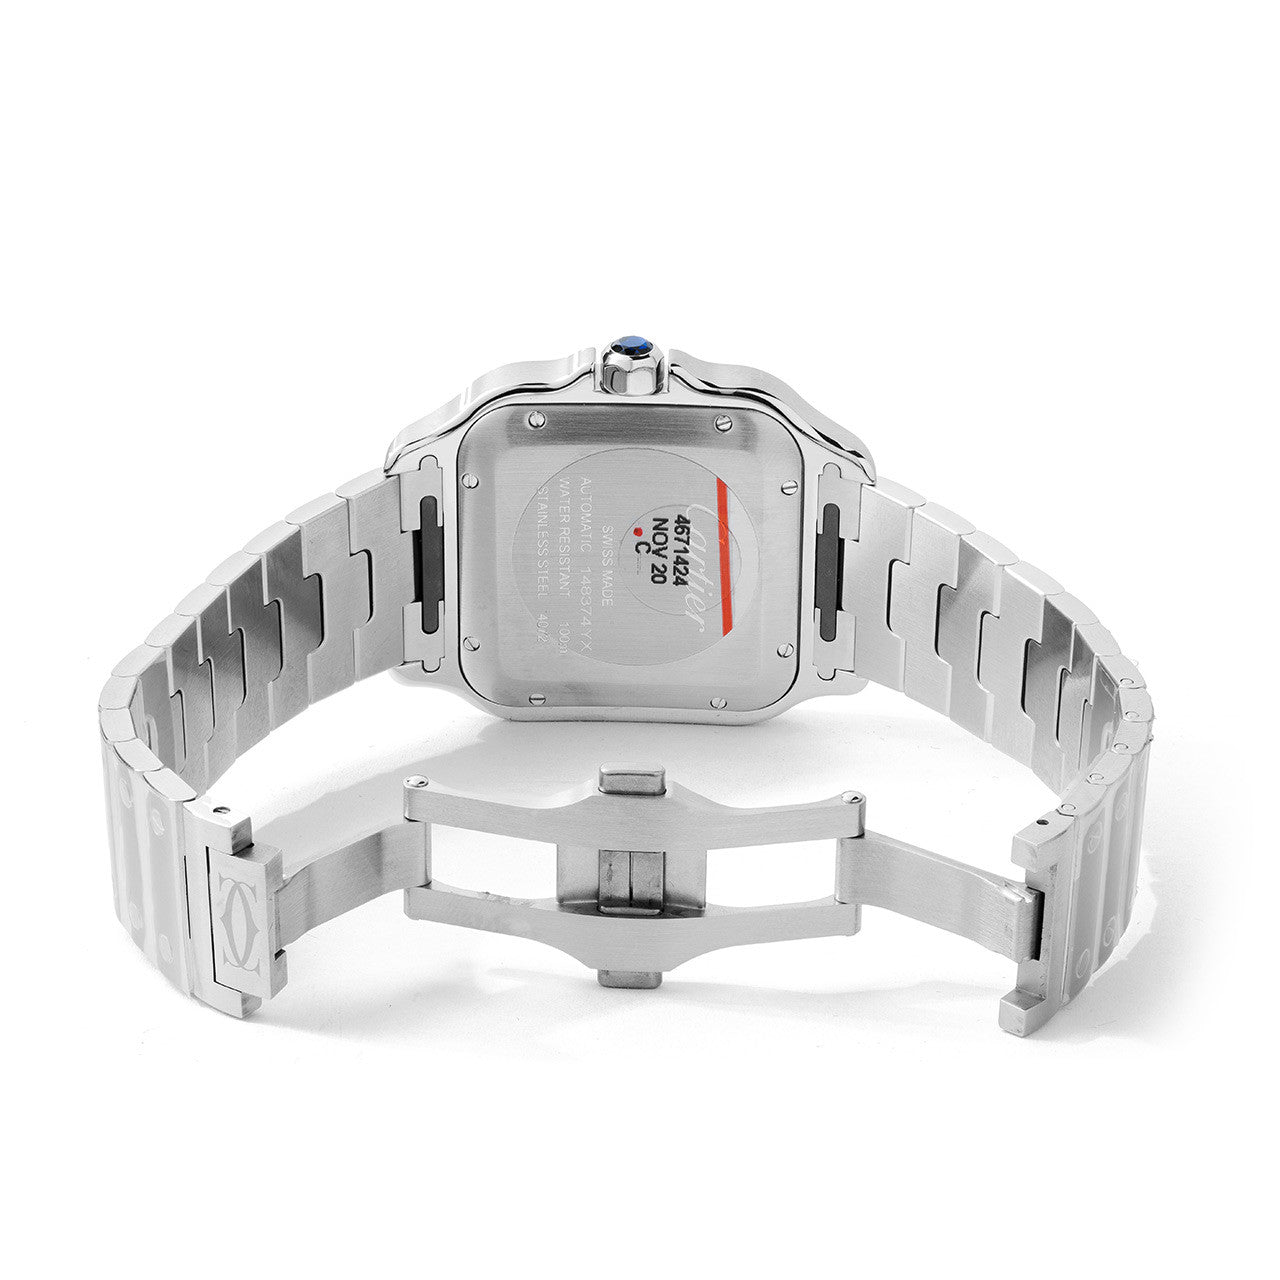 Cartier Santos Blue Dial Watch Stainless Steel